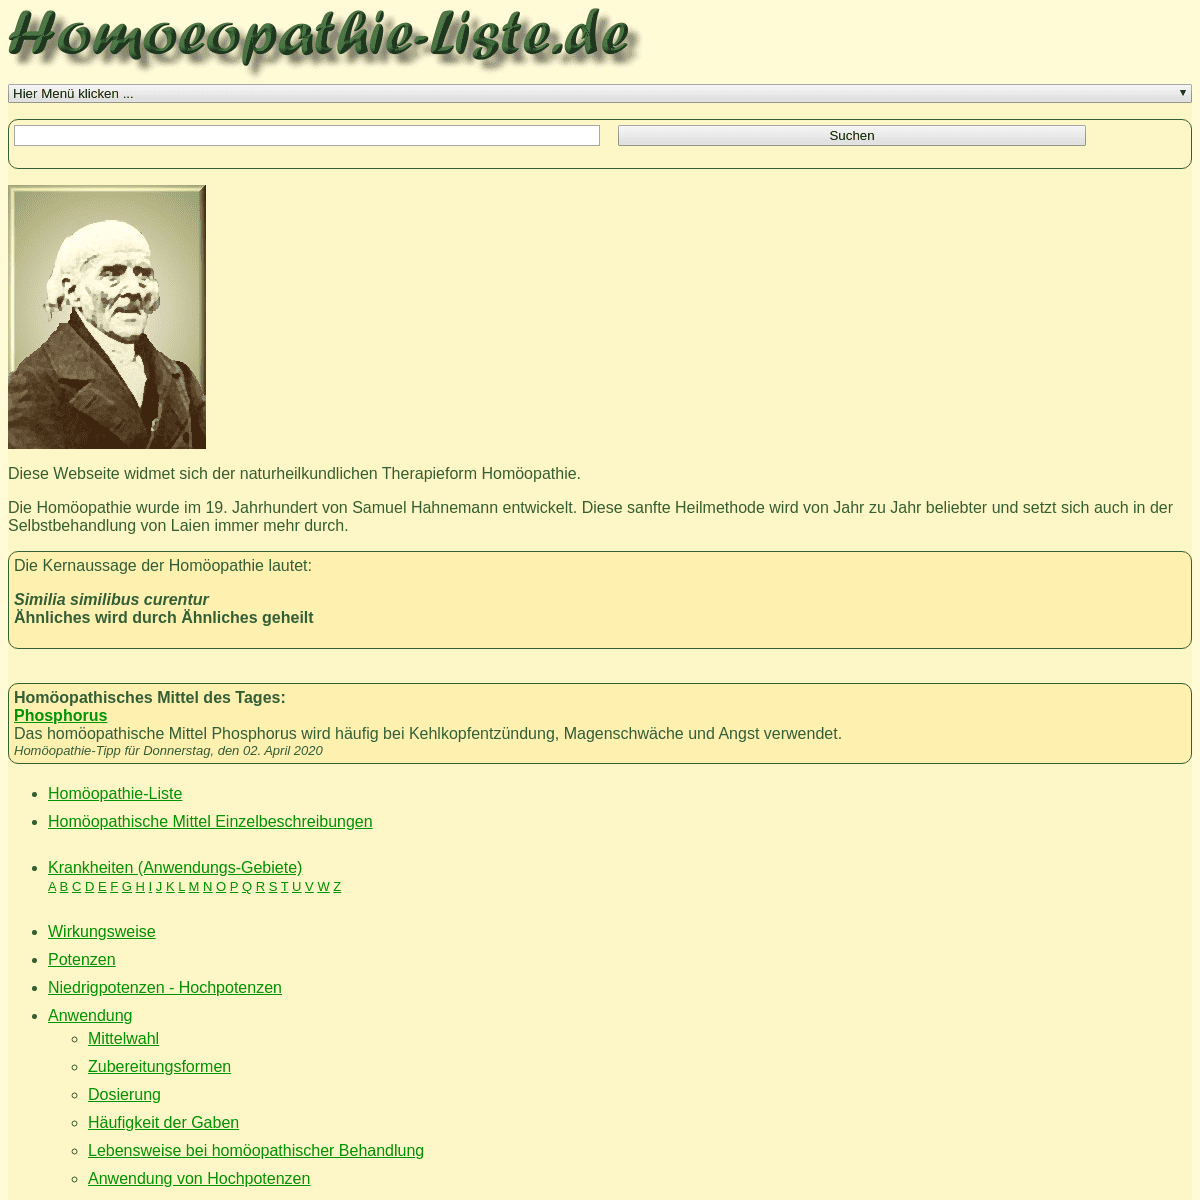 A complete backup of homoeopathie-liste.de